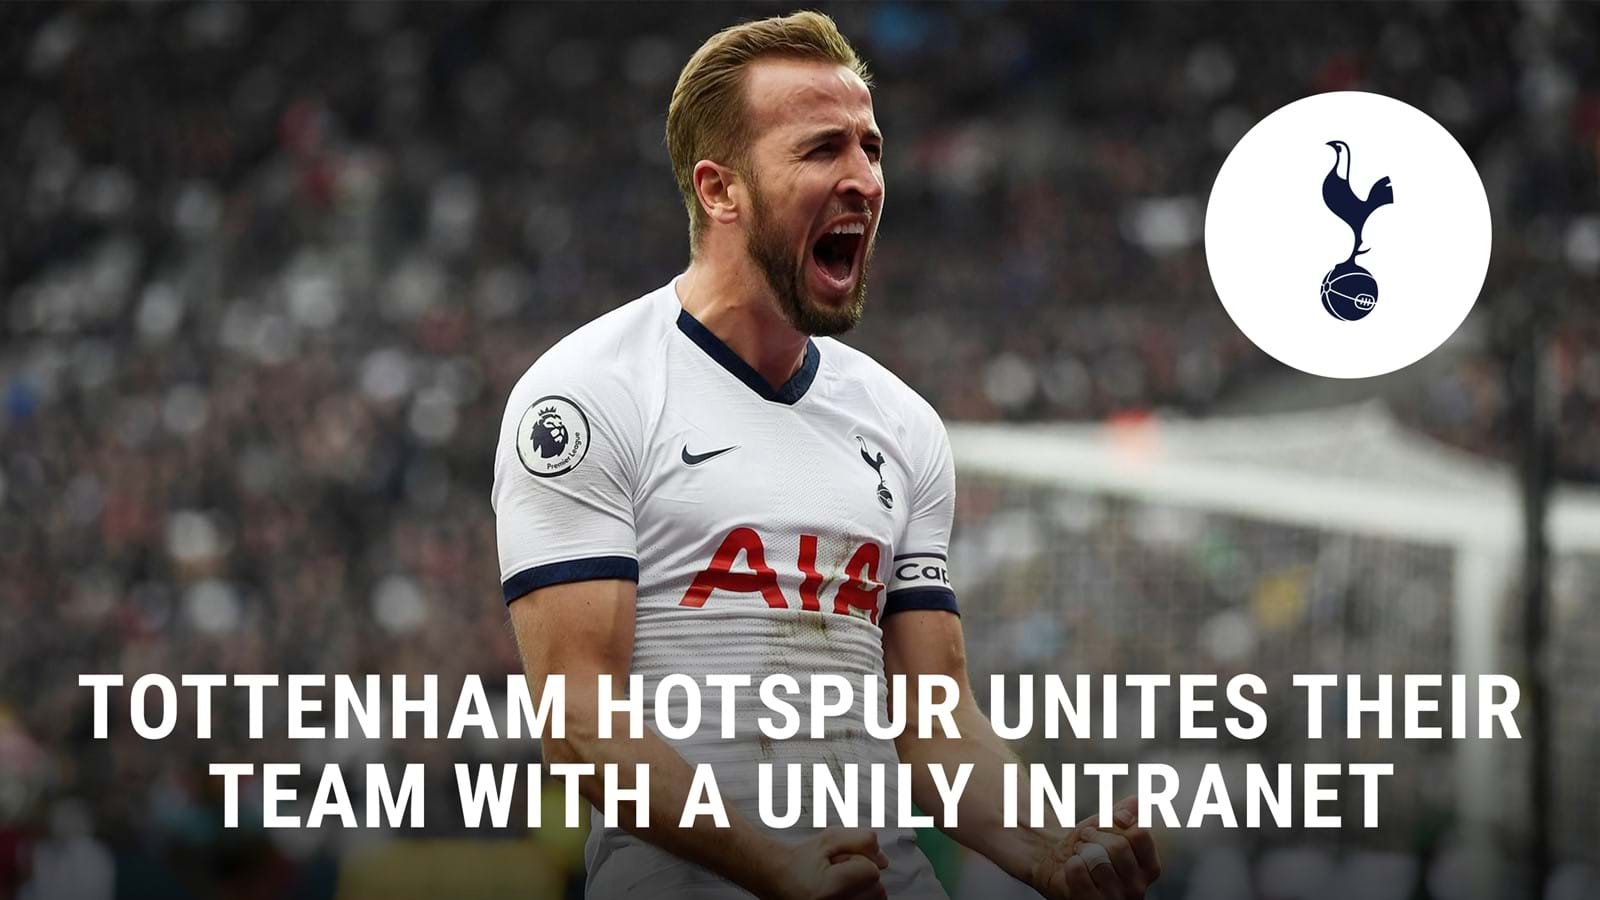 Tottenham Hotspur intranet case study download